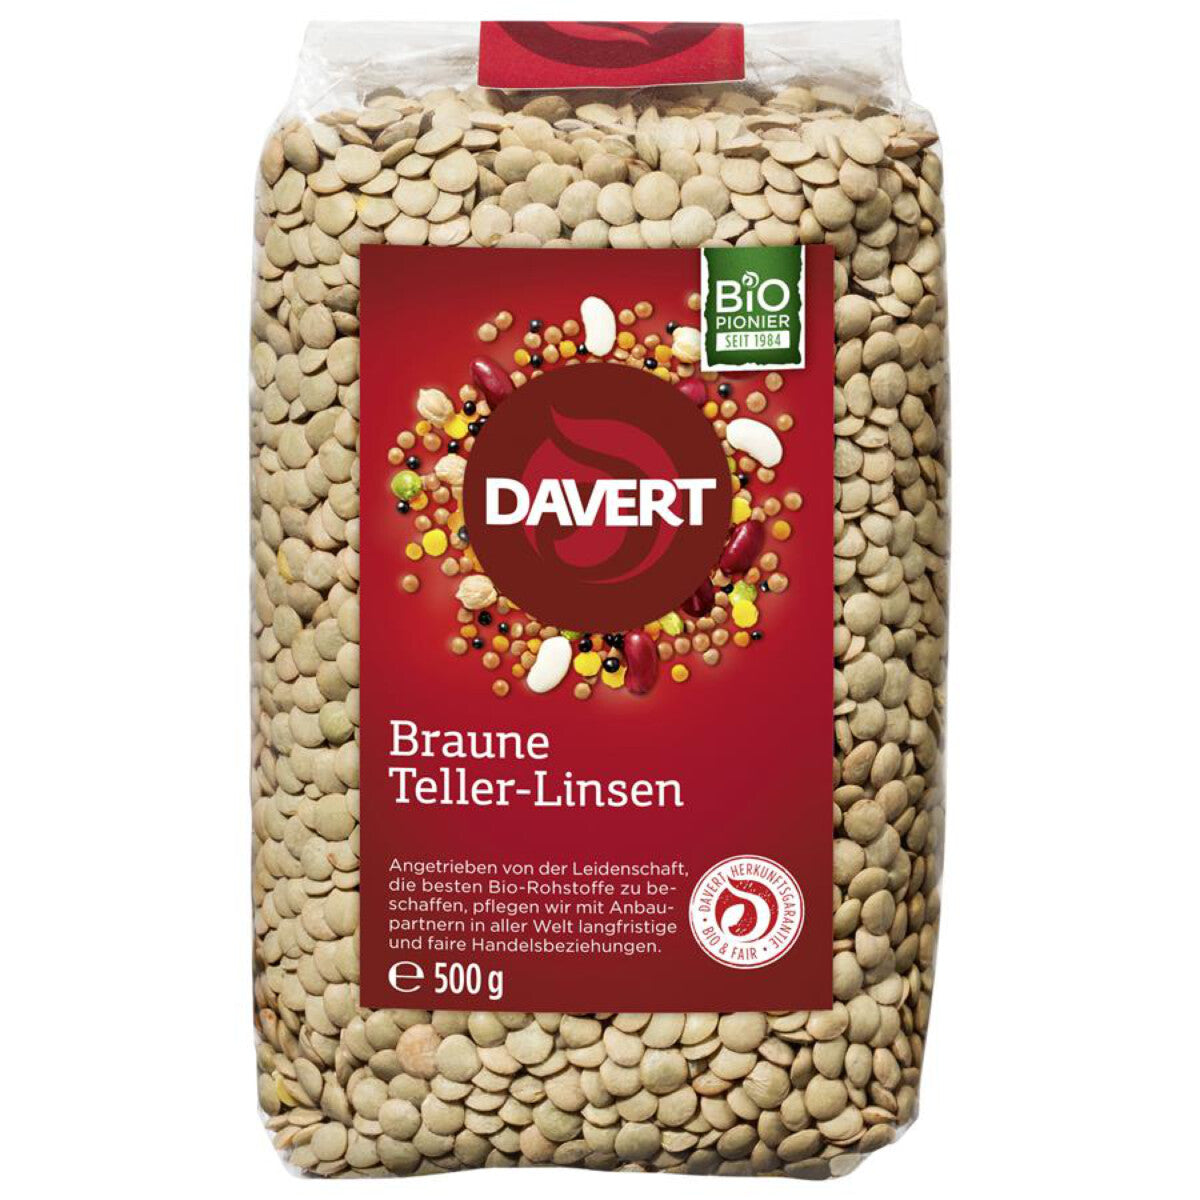 DAVERT Braune Teller-Linsen - 500 g